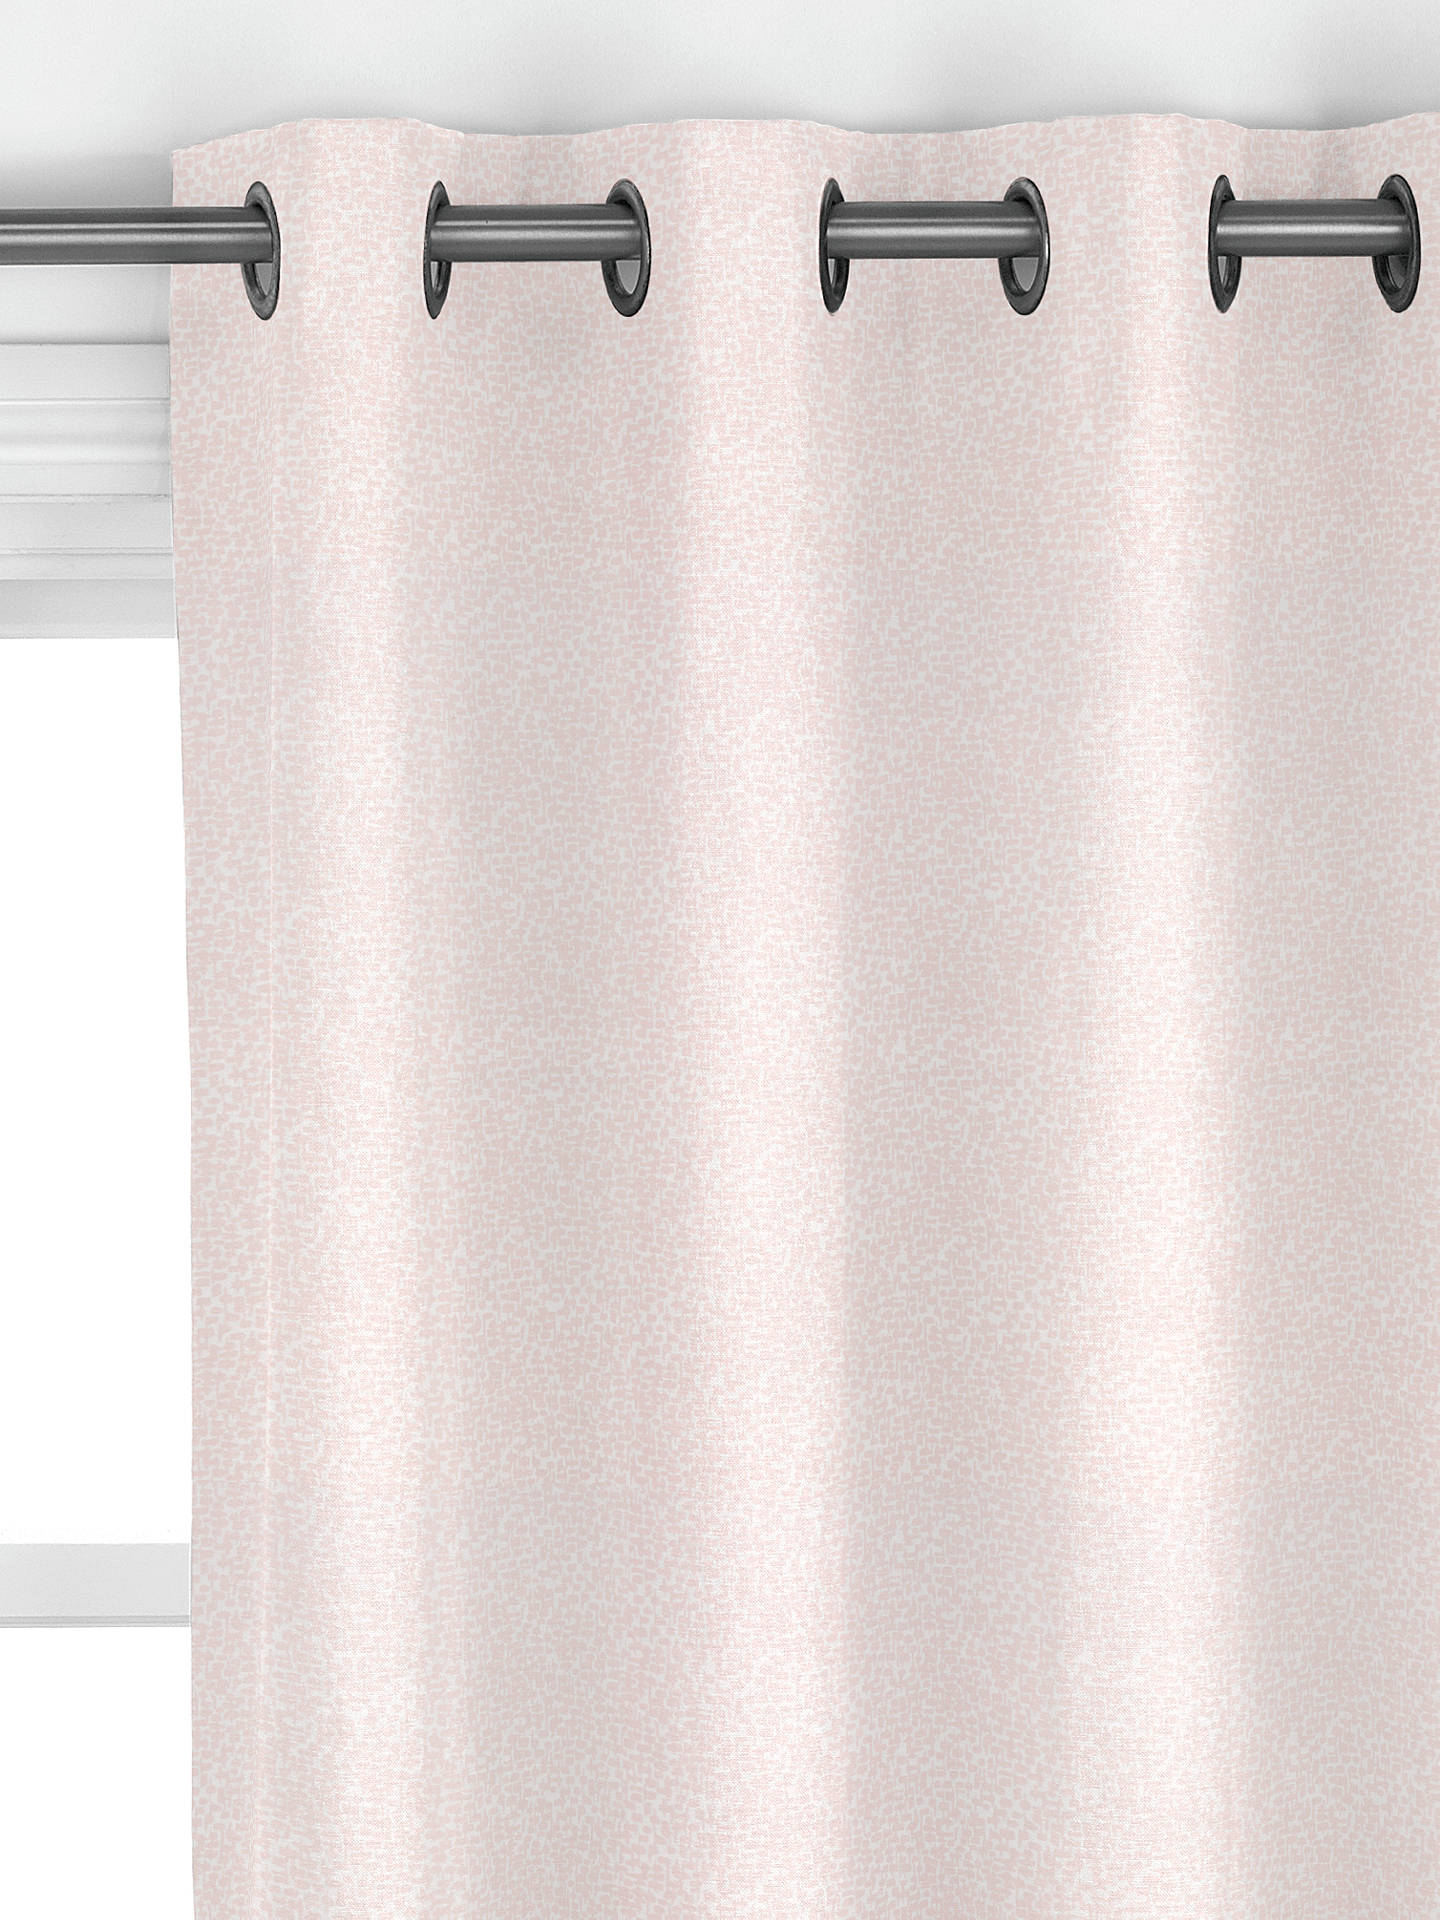 John Lewis Yin Made to Measure Curtains, Soft Pink